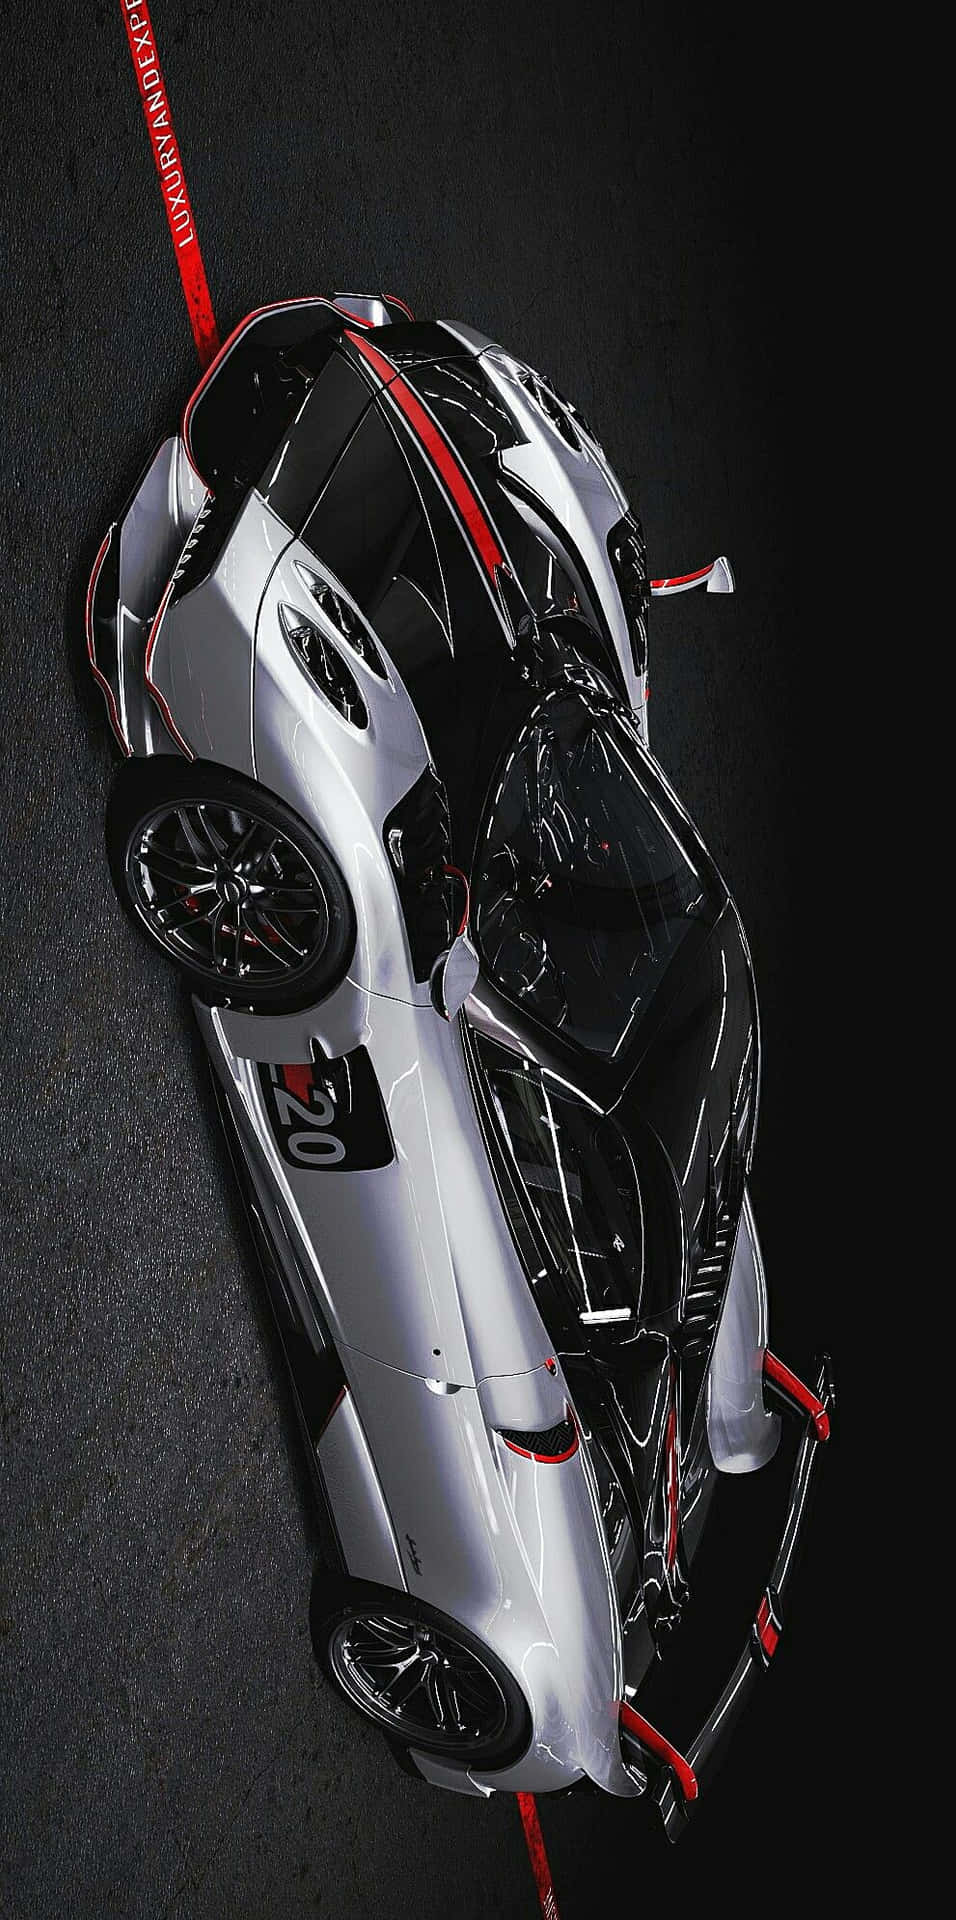 Striking Beauty Of The Pagani Zonda C12 Roadster Wallpaper